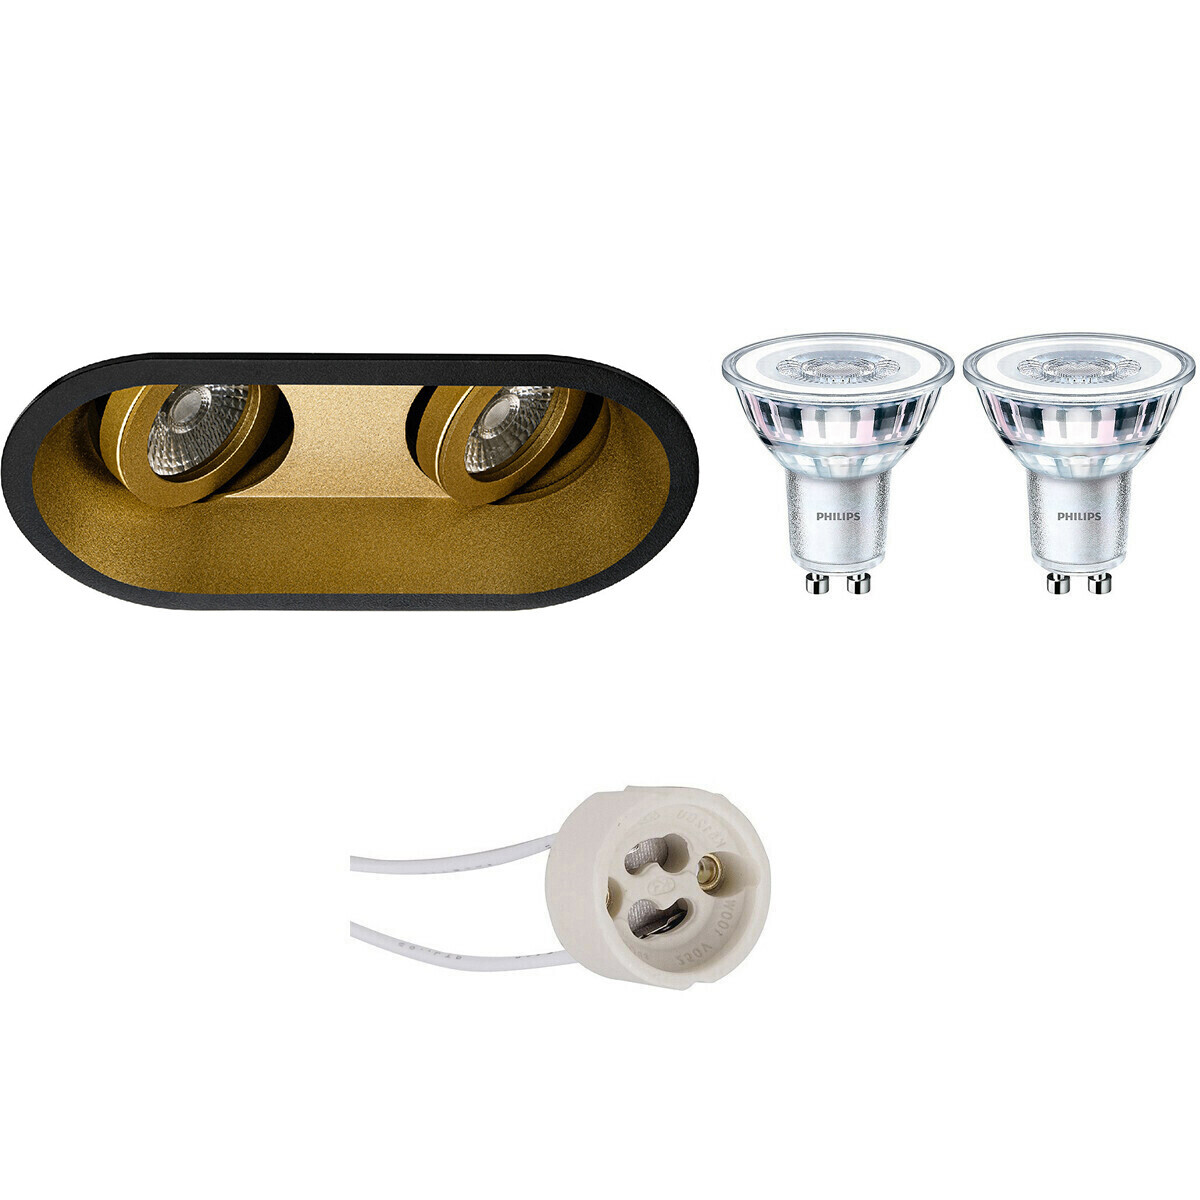 BES LED Voordeelset: LED Spot Set - Pragmi Zano Pro - GU10 Fitting - Inbouw Ovaal Dubbel - Mat Zwart/Goud - Kantelbaar - 185x93mm - Philips - CorePro 827 36D - 3.5W - Warm Wit 2700K - Voordeelset